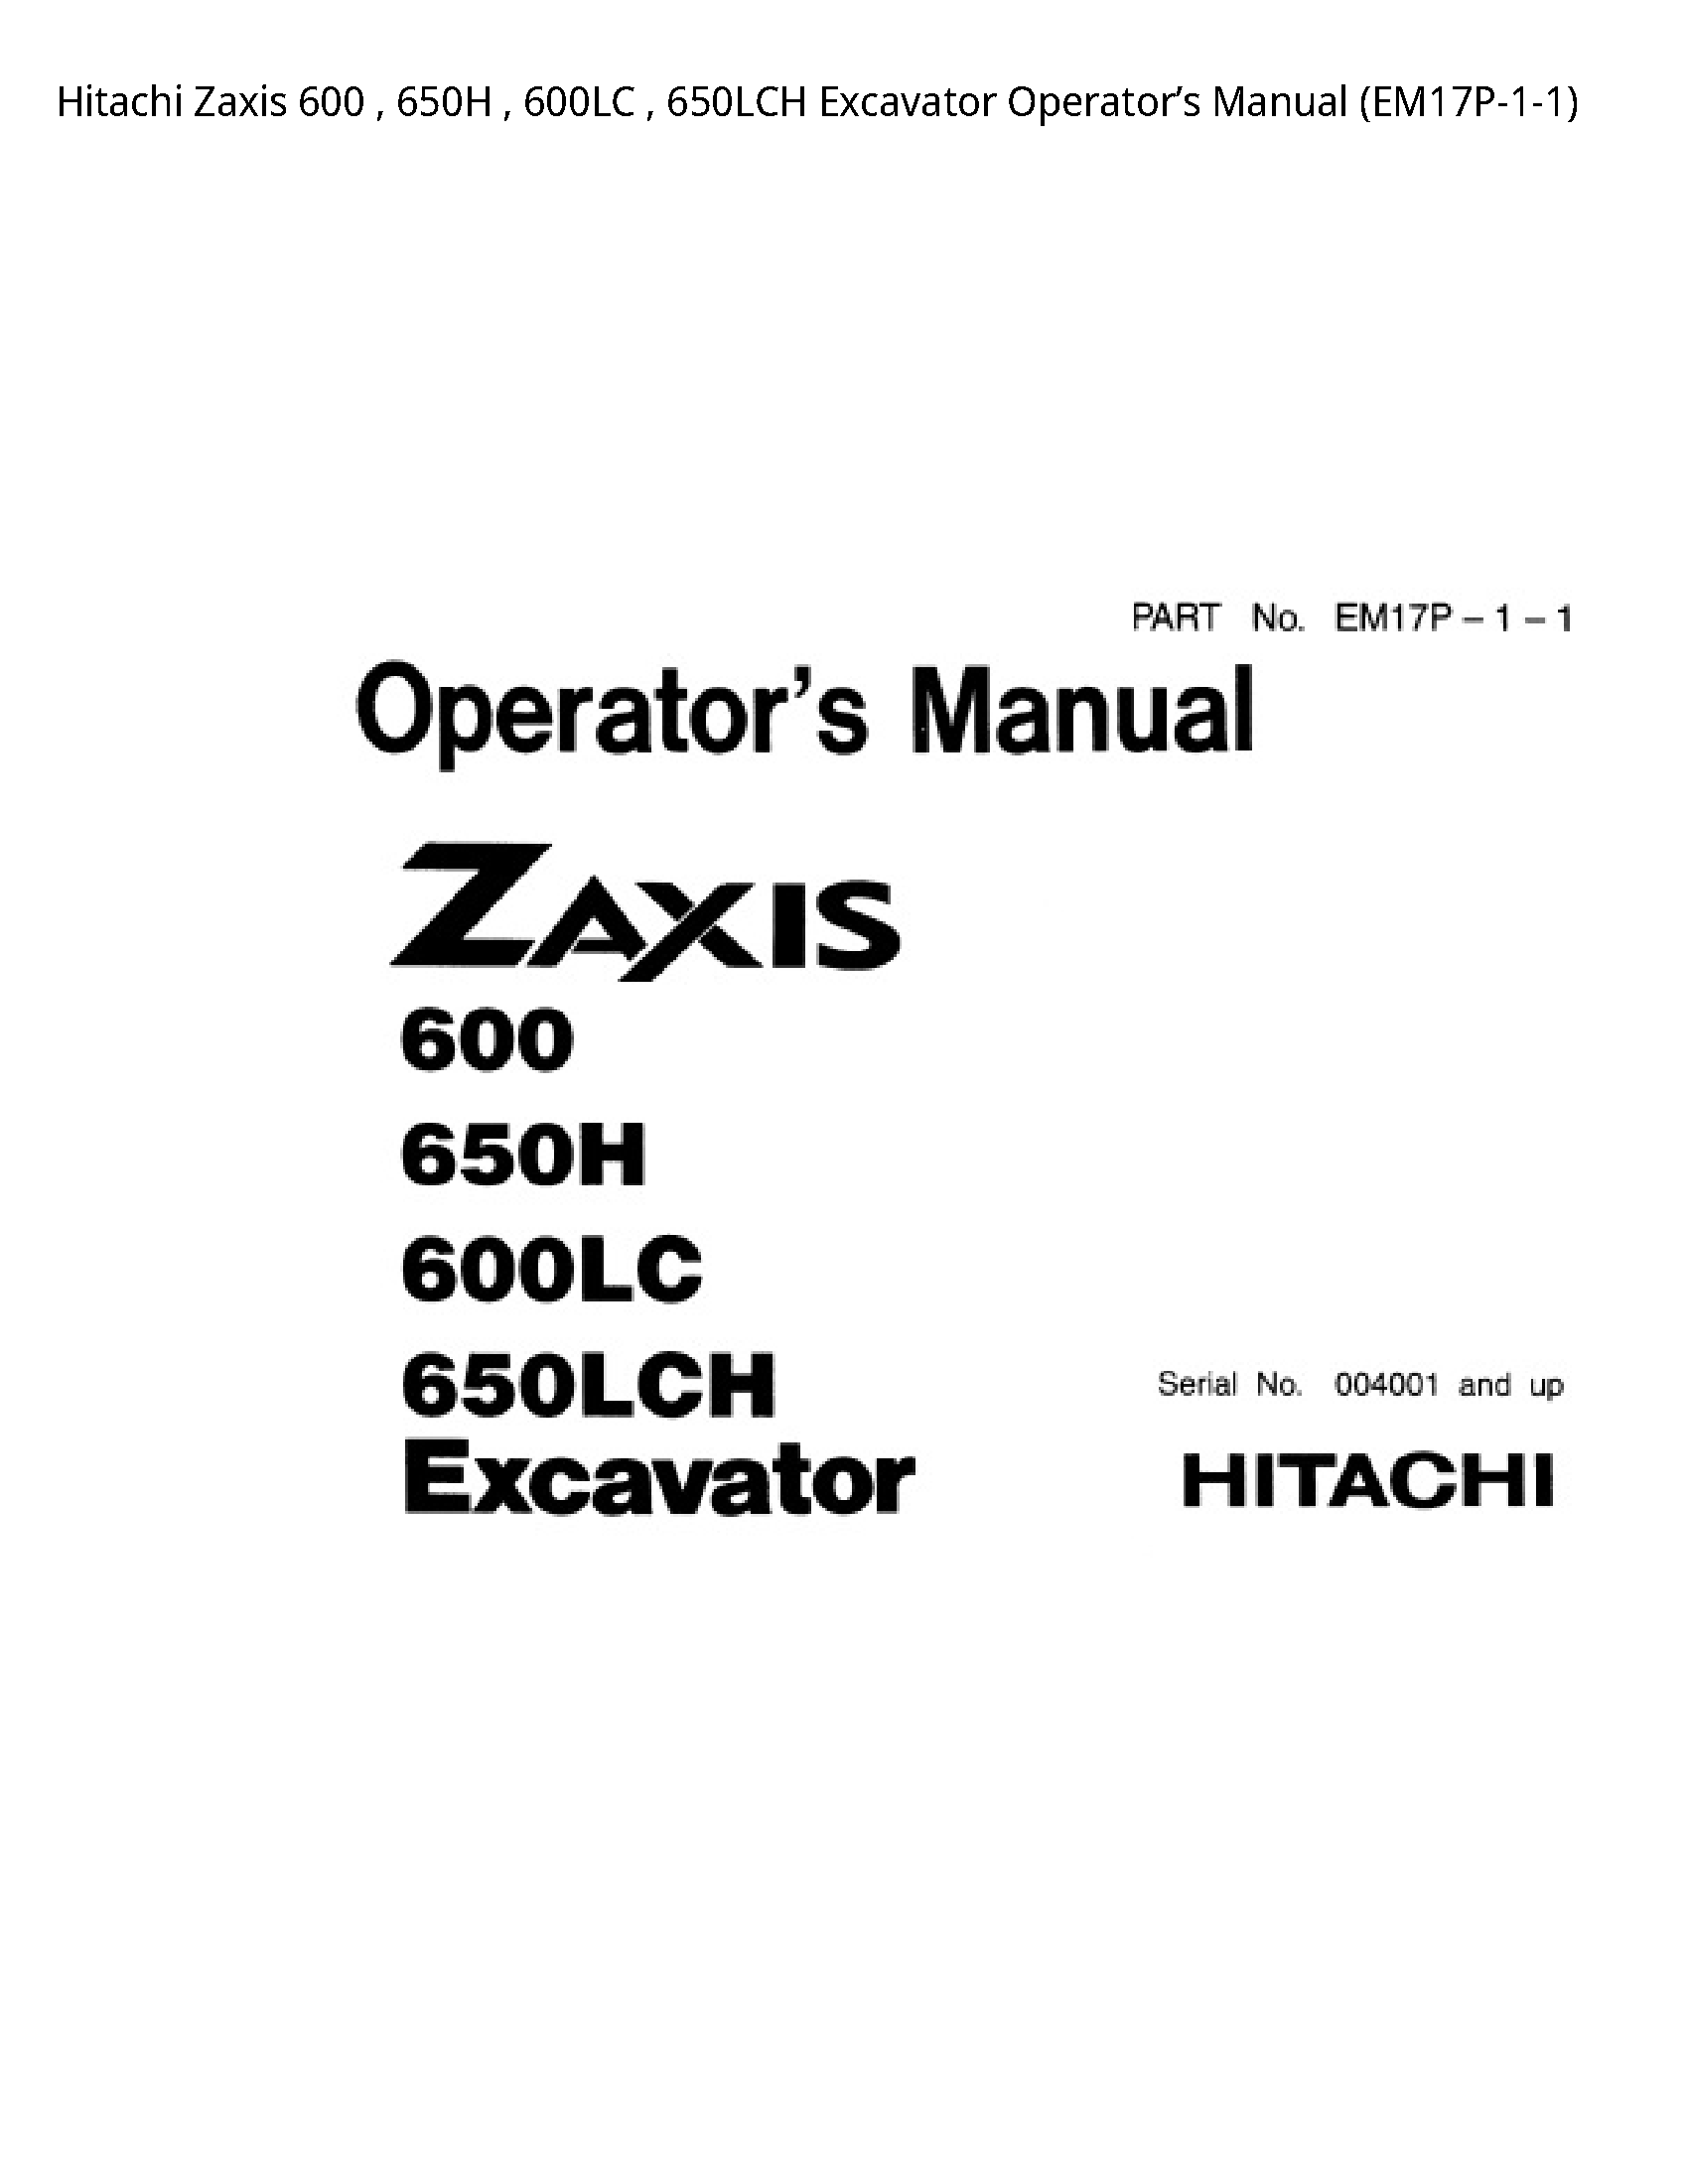 Hitachi 600 Zaxis Excavator Operator’s manual